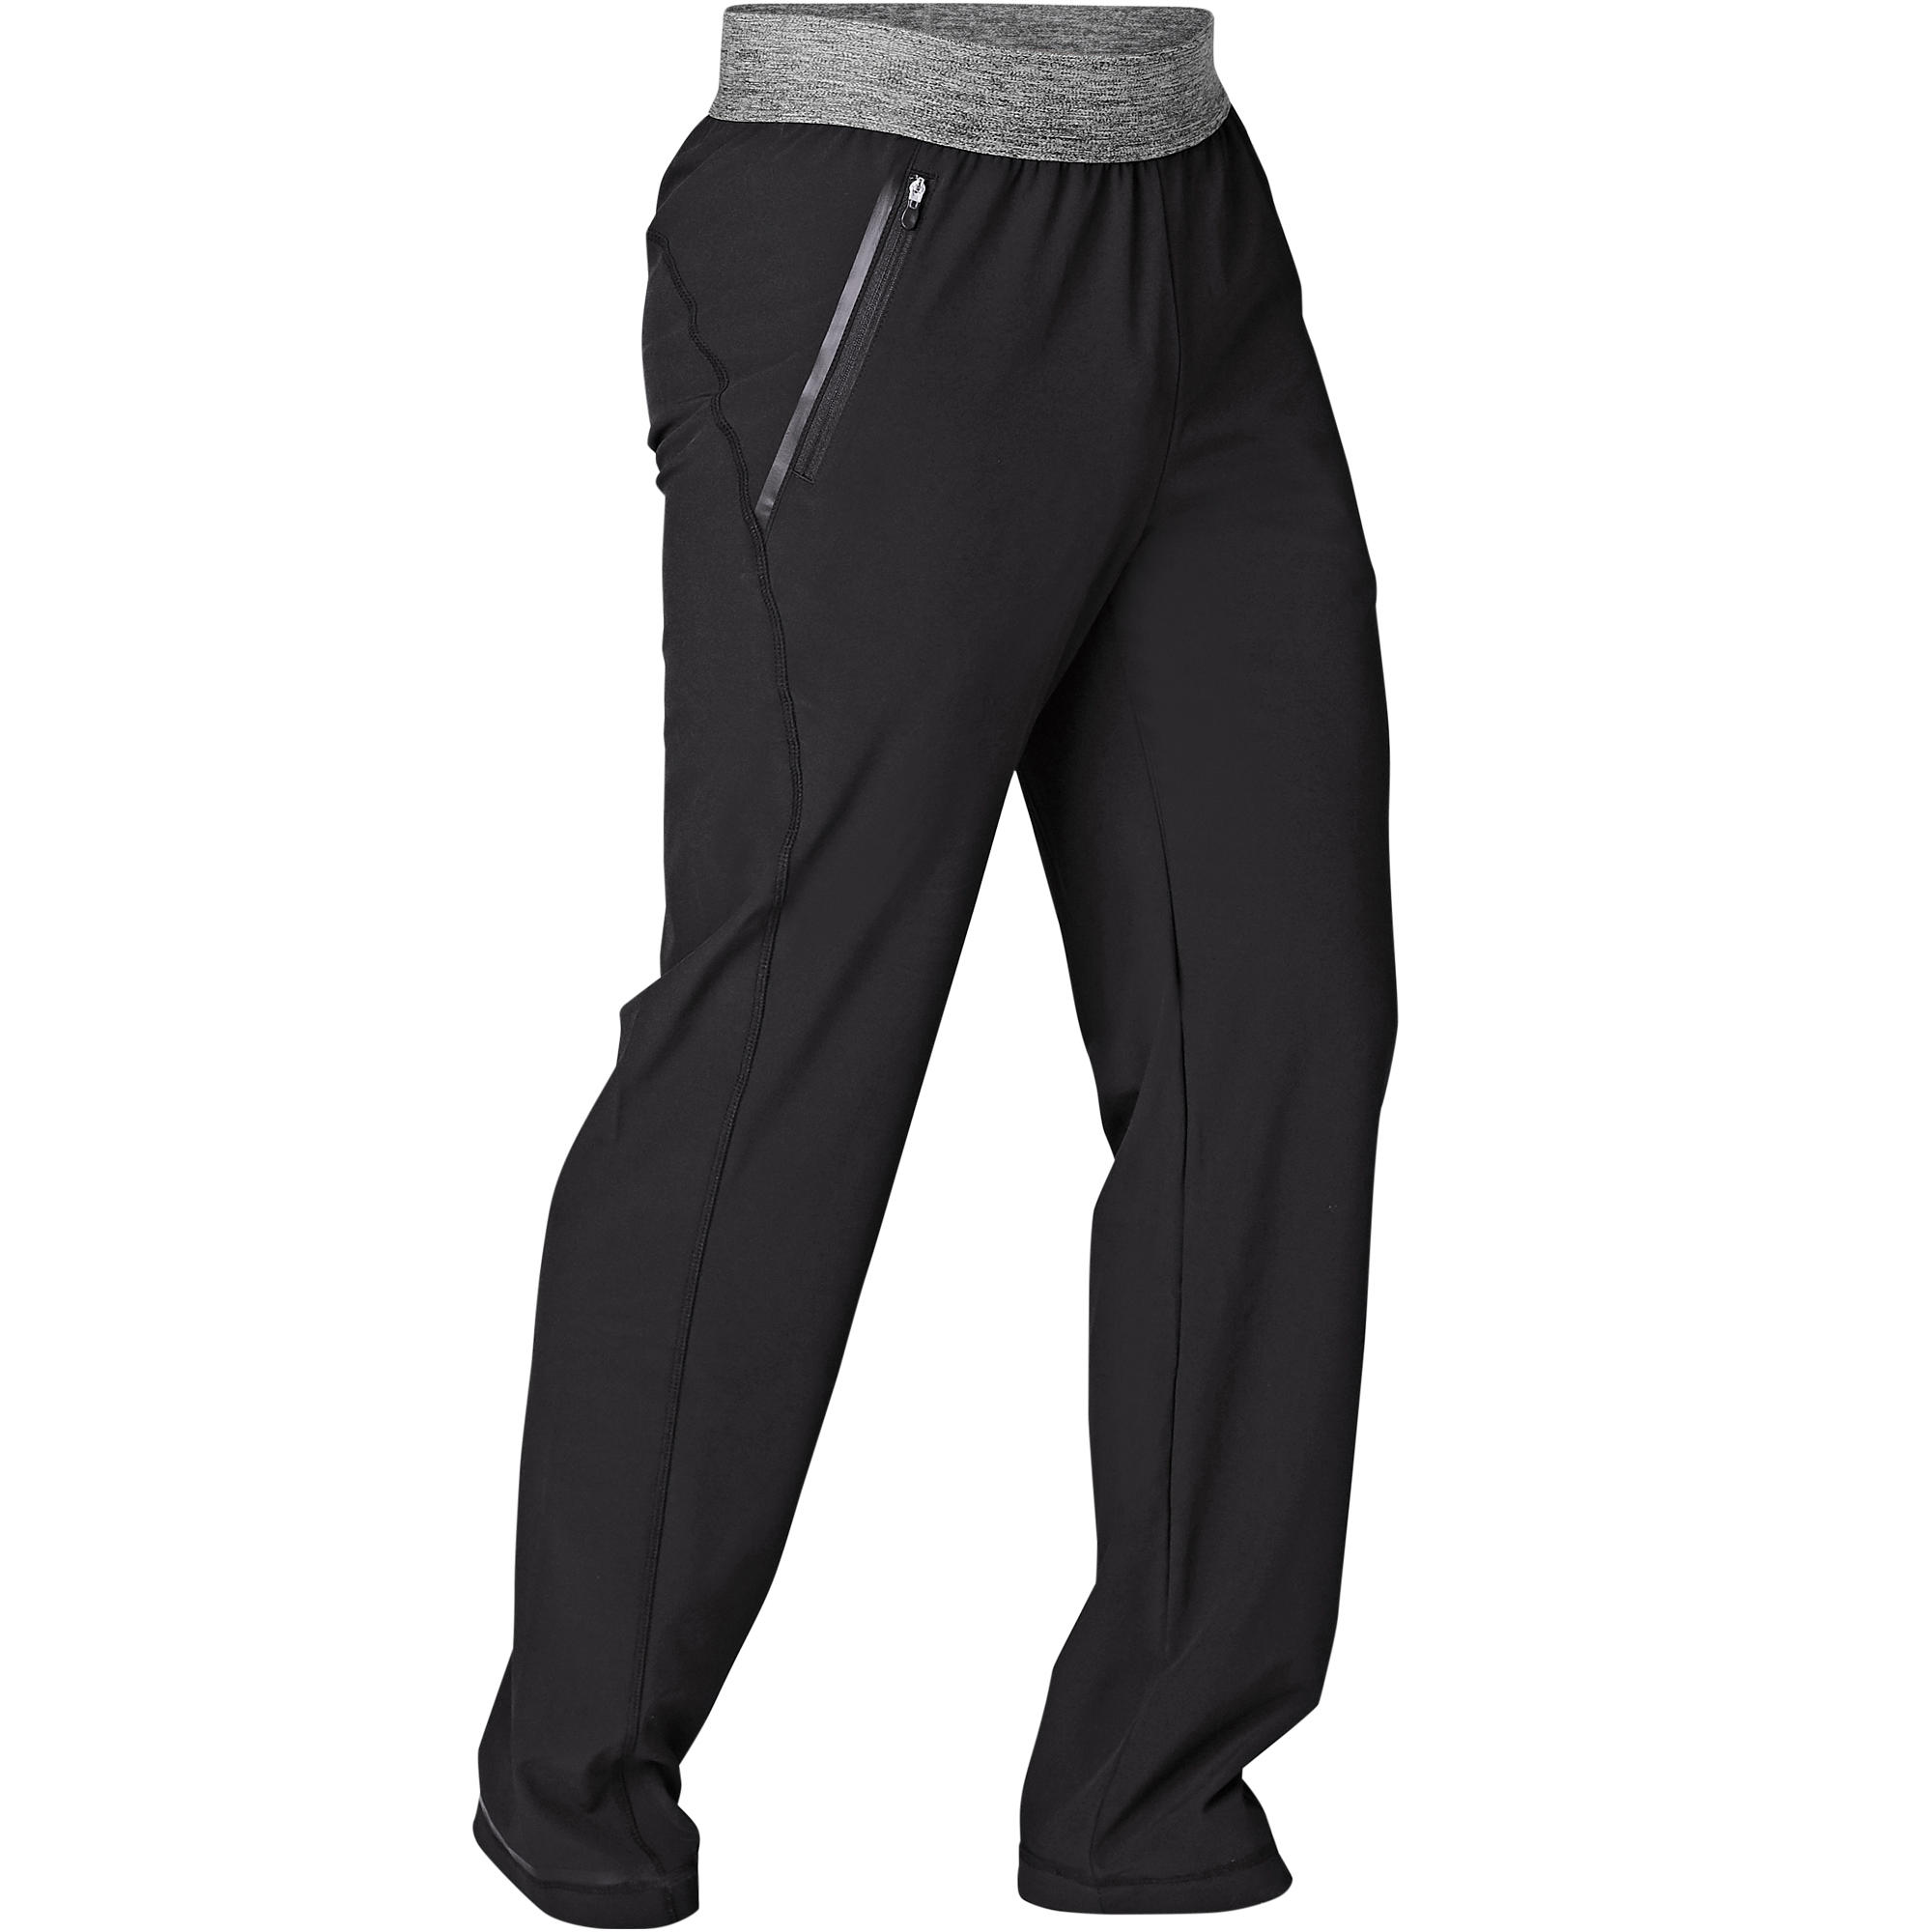 Domyos Decathlon Unisex Outdoor Track Active Pants Size 32X31 Black EUC |  eBay